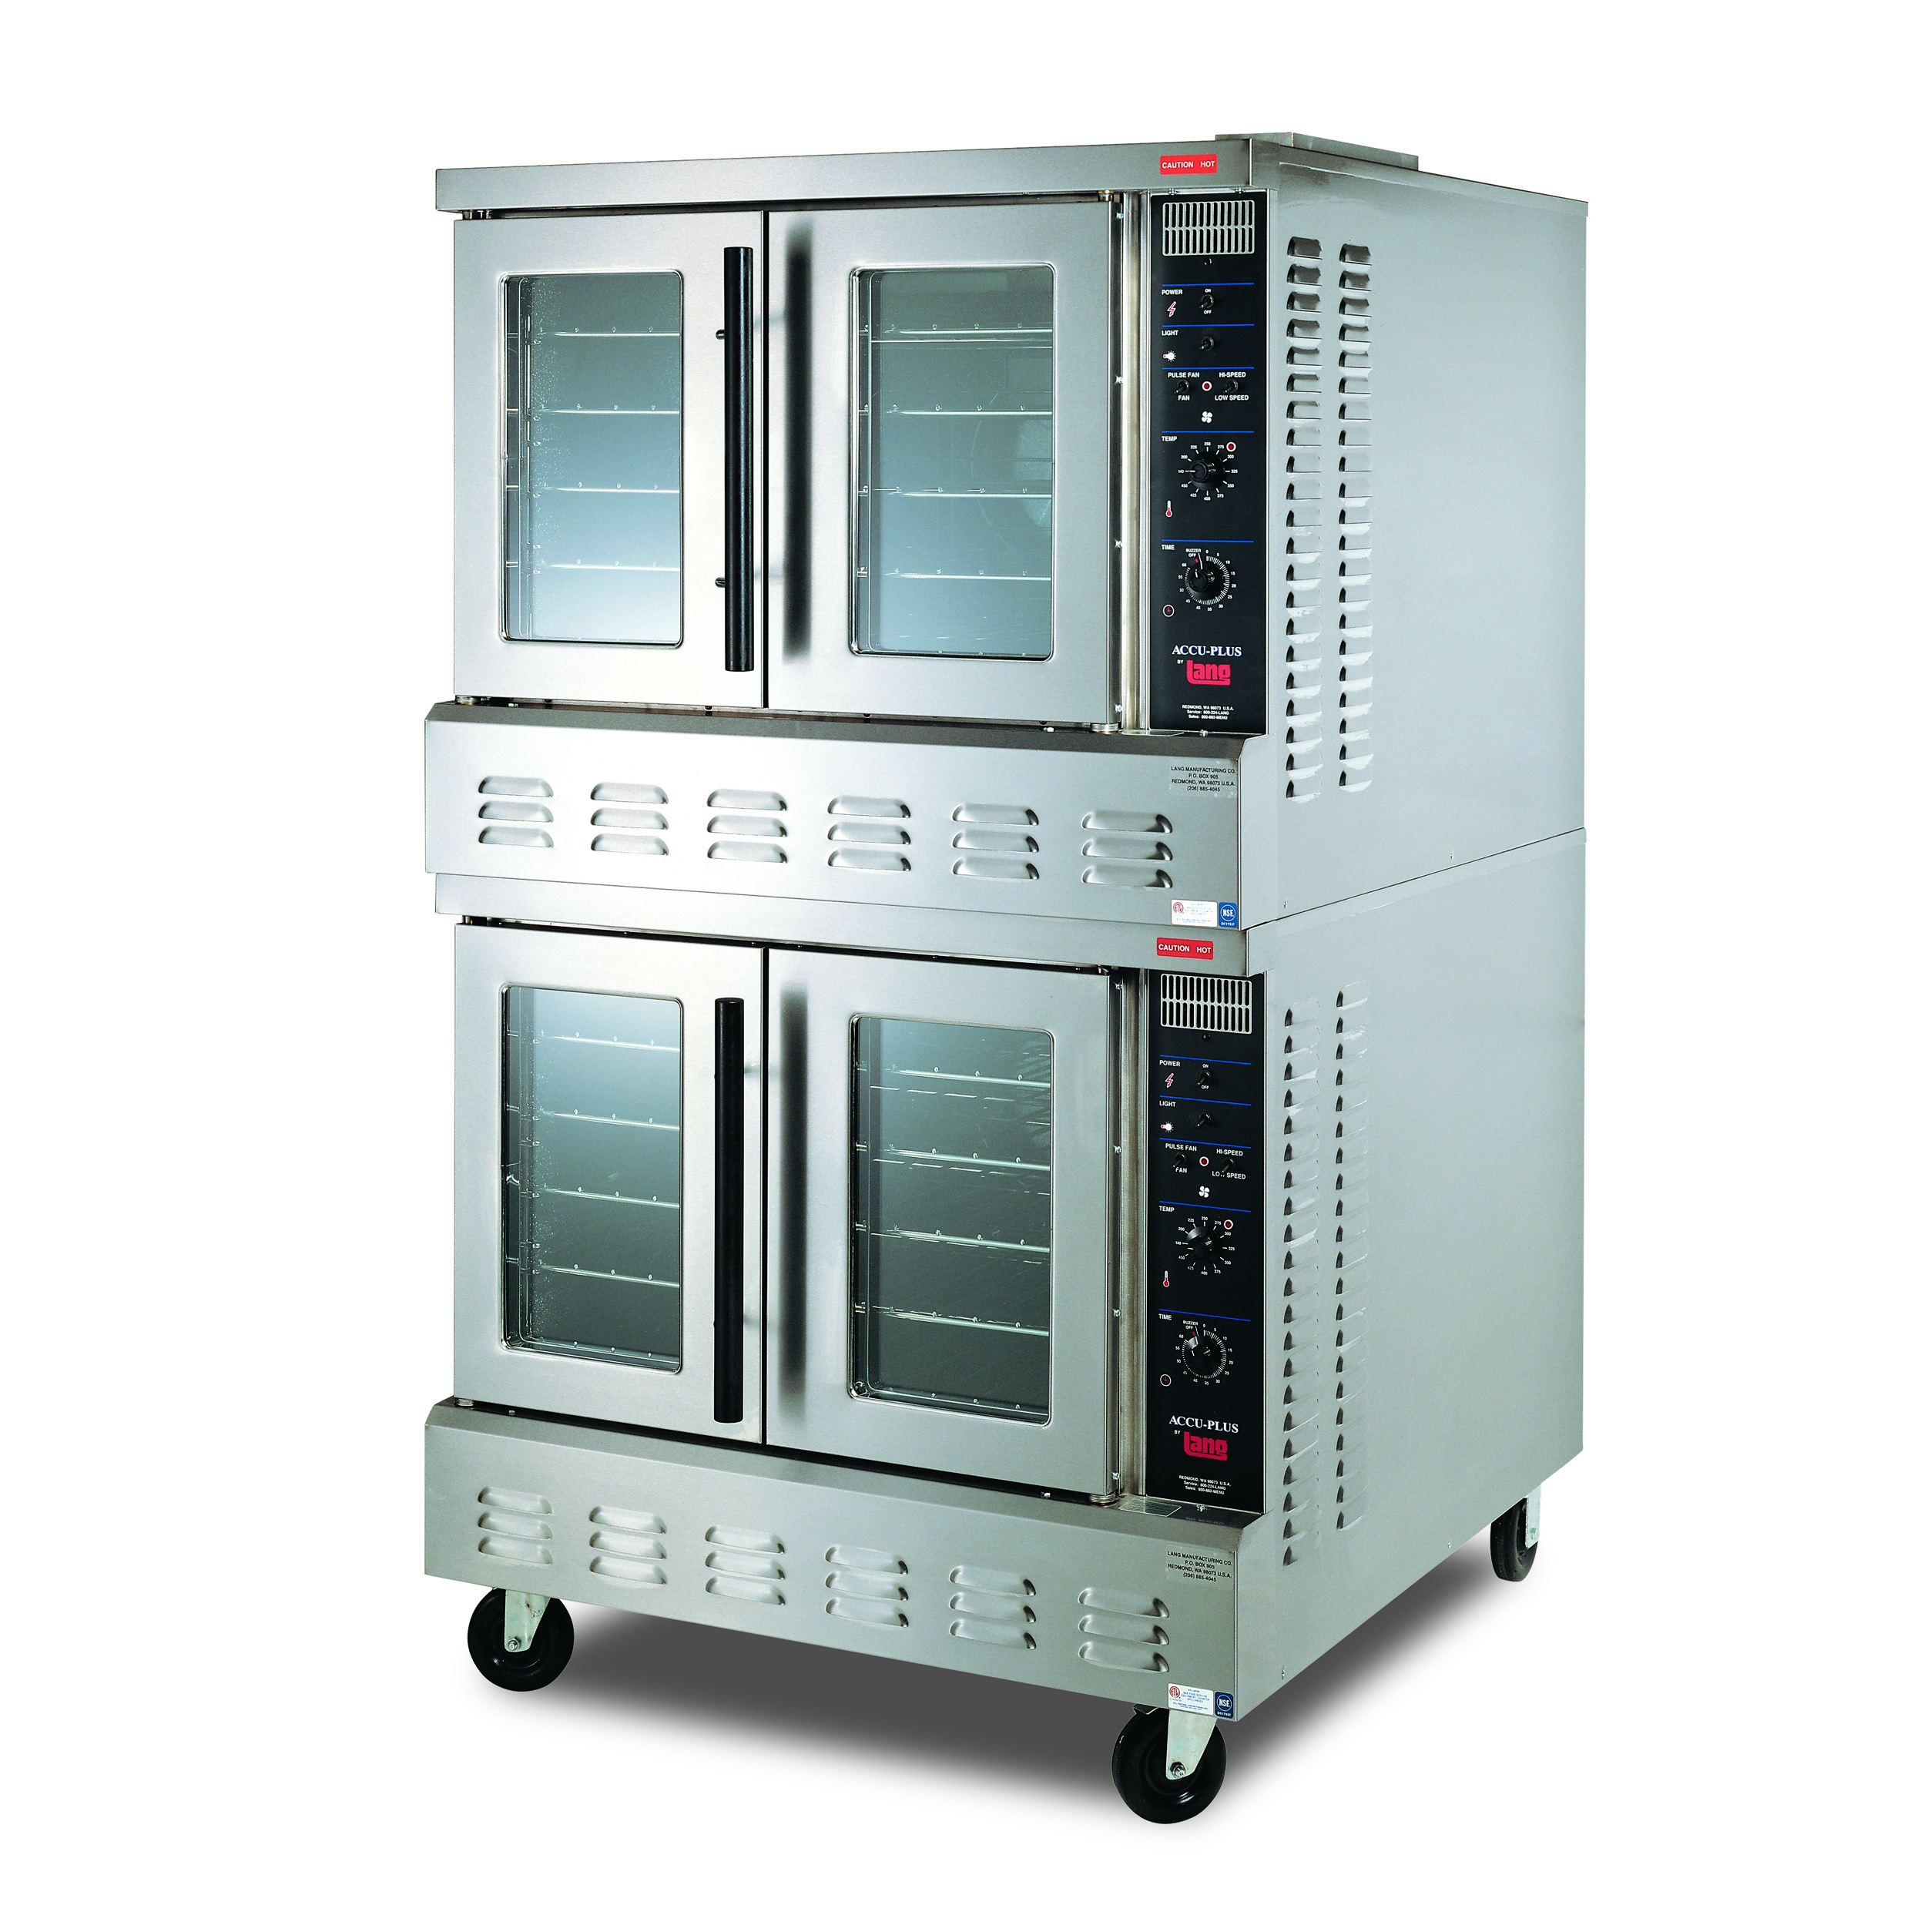 Lang GCOD-AP2 Double Deck, Bakery Depth Gas Convection Oven